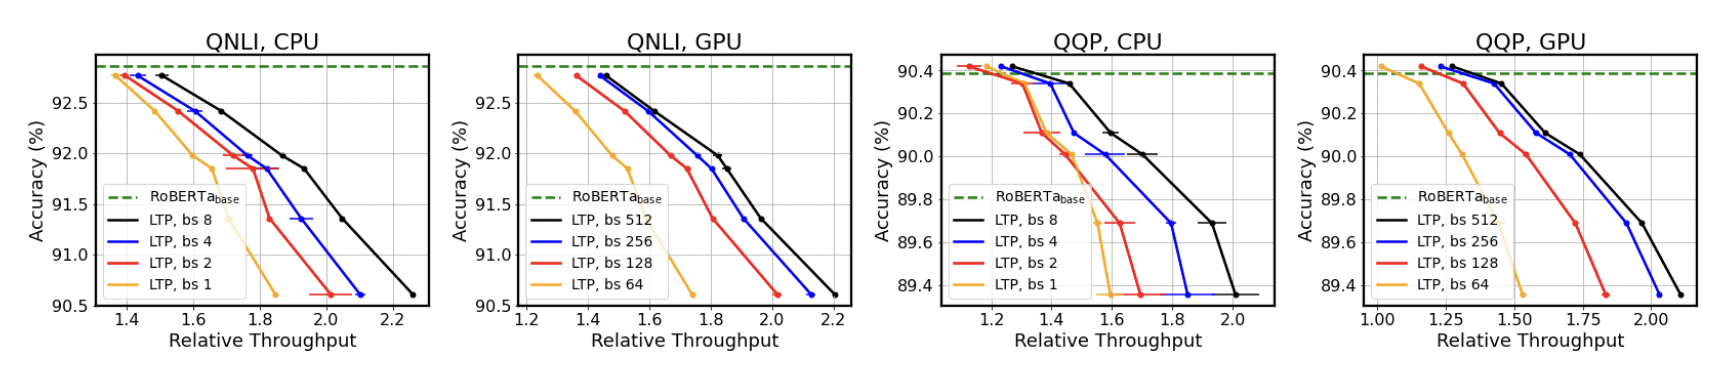 Относительное ускорение модели (отношение времен обработки одного батча) для задач QNLP, QQP на CPU (Intel Haswell) и GPU (Nvidia V100). 